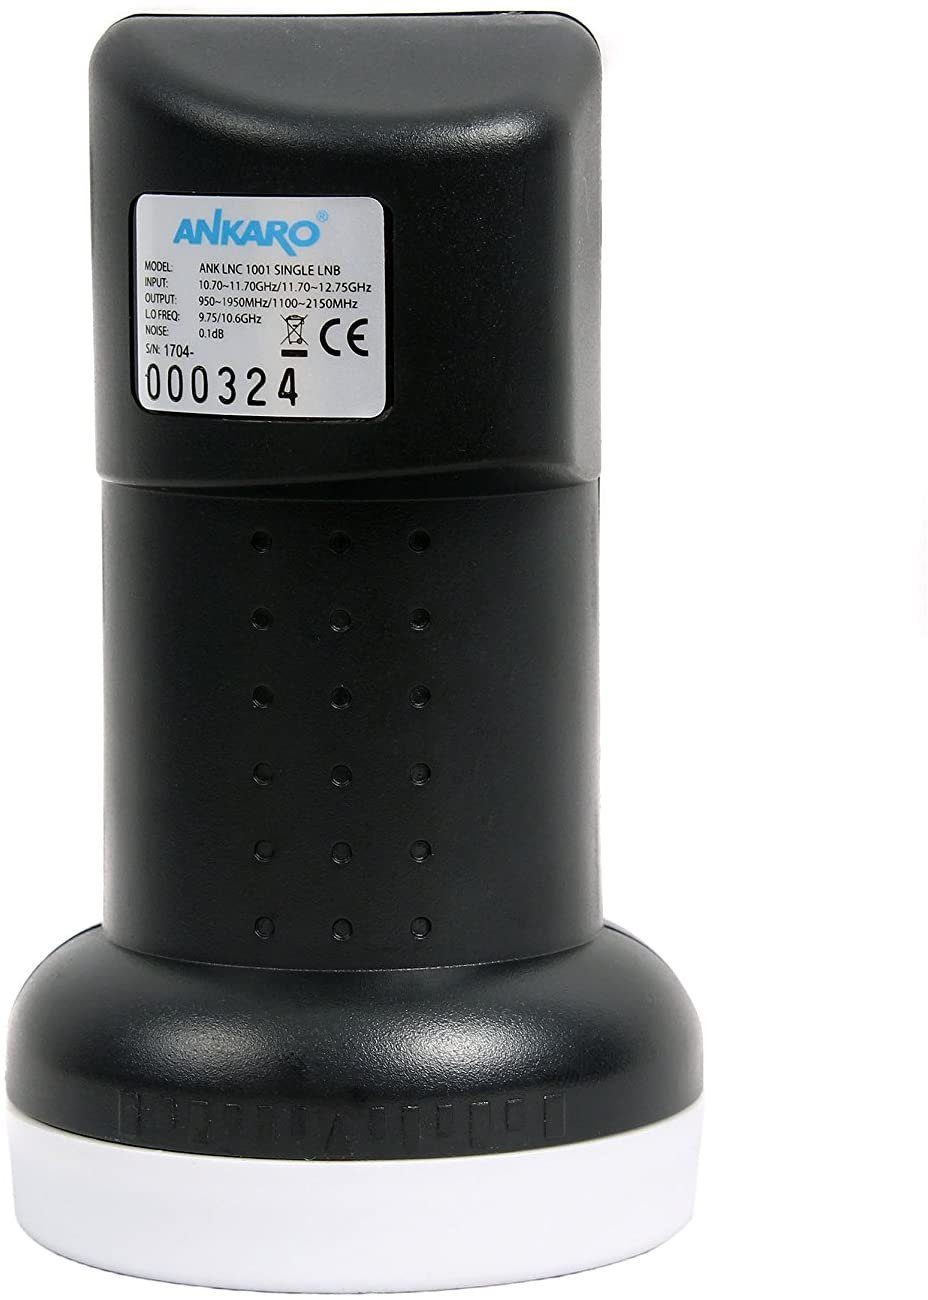 Ankaro protectet Ankaro LTE Single Premium Universal-Single-LNB Wetterschutztülle, incl. 1001 LNC